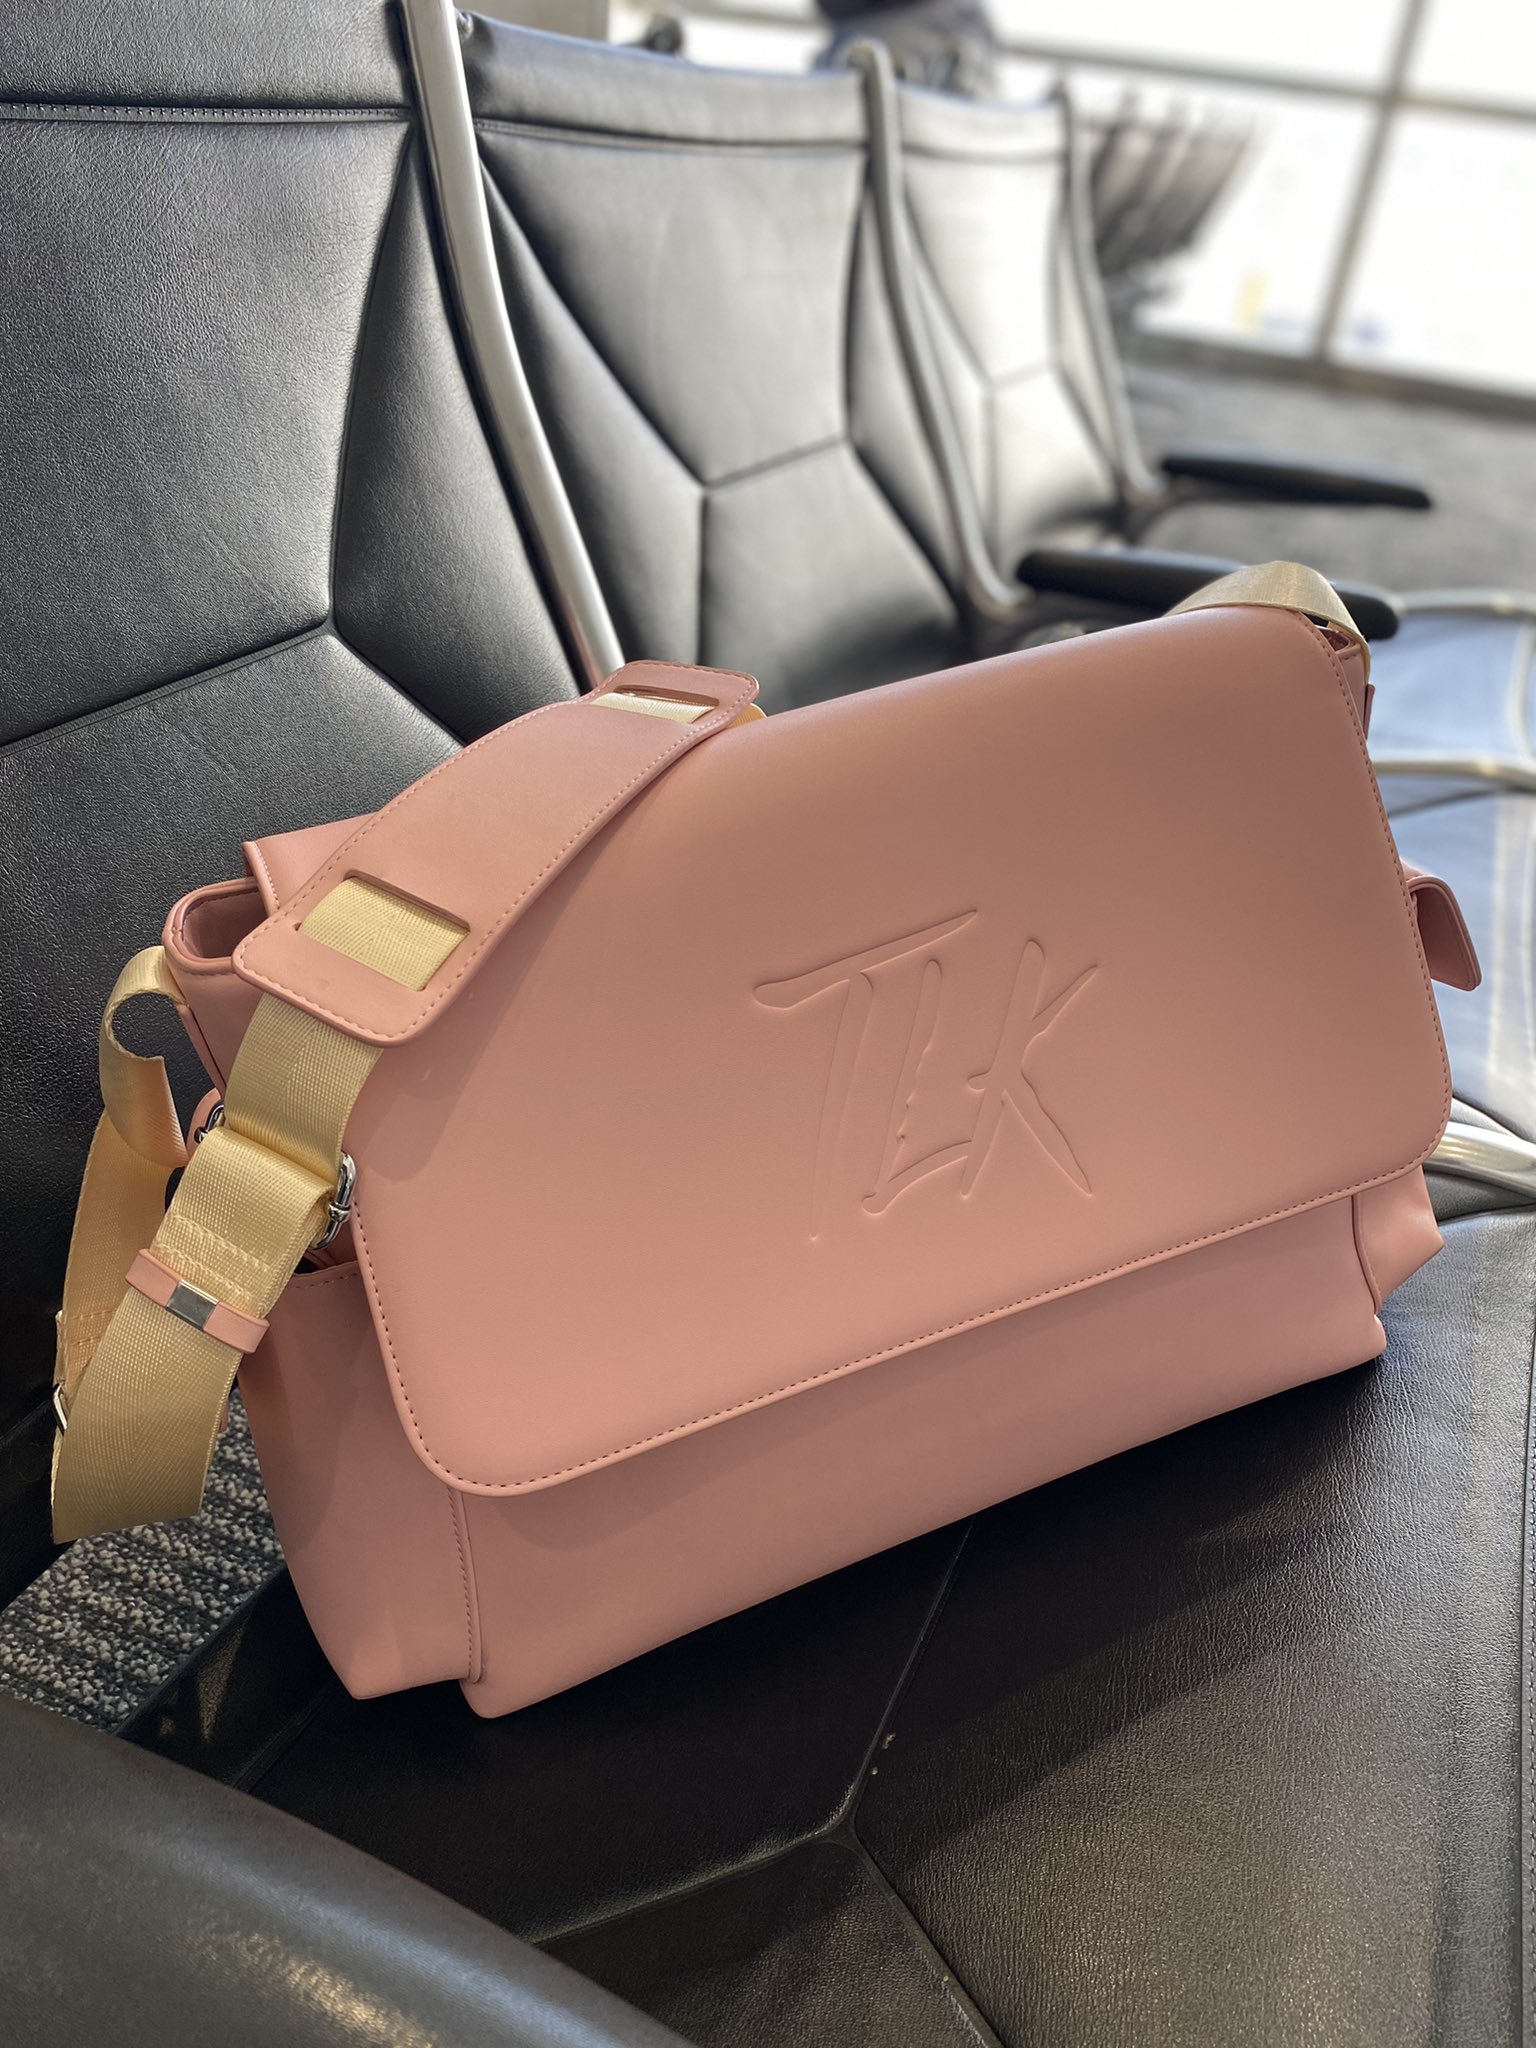 Louis Vuitton Diaper Bag Pink